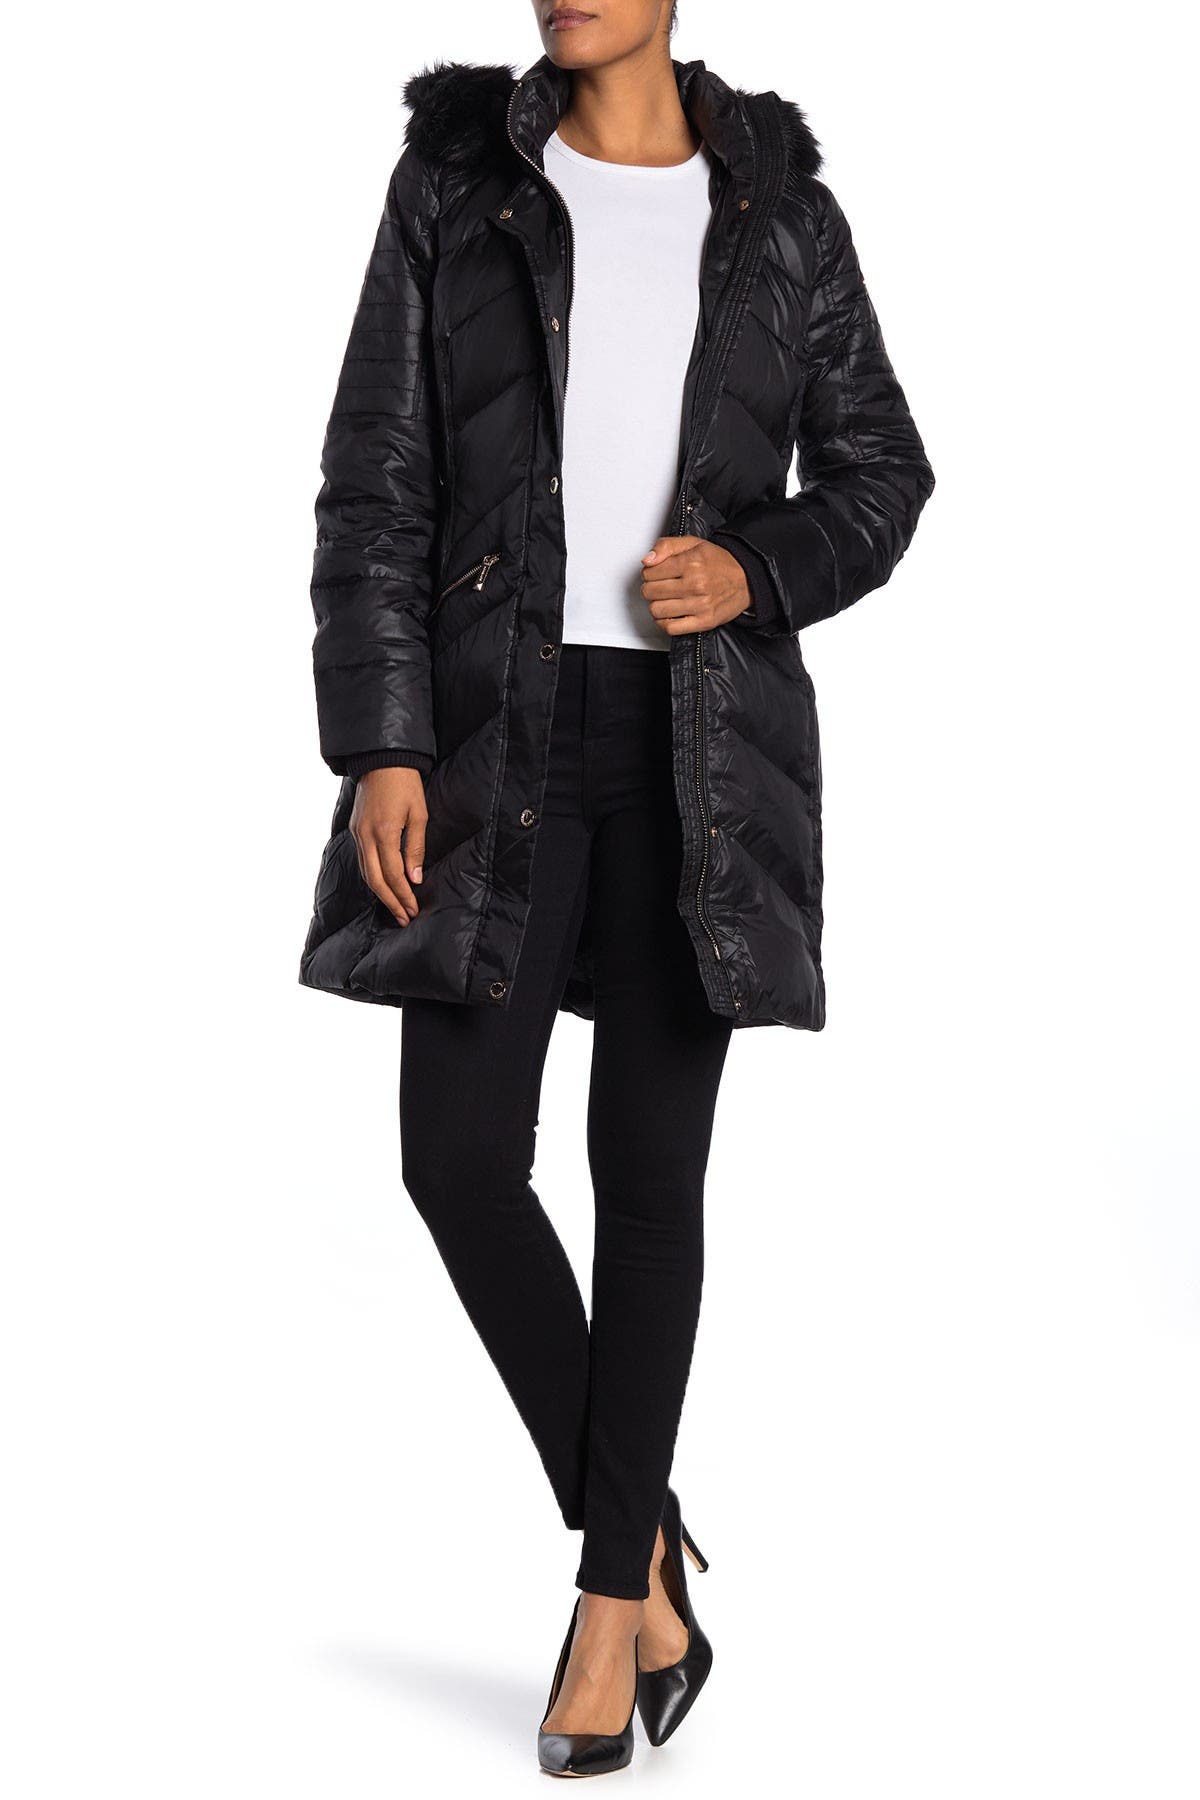 michael kors black padded coat